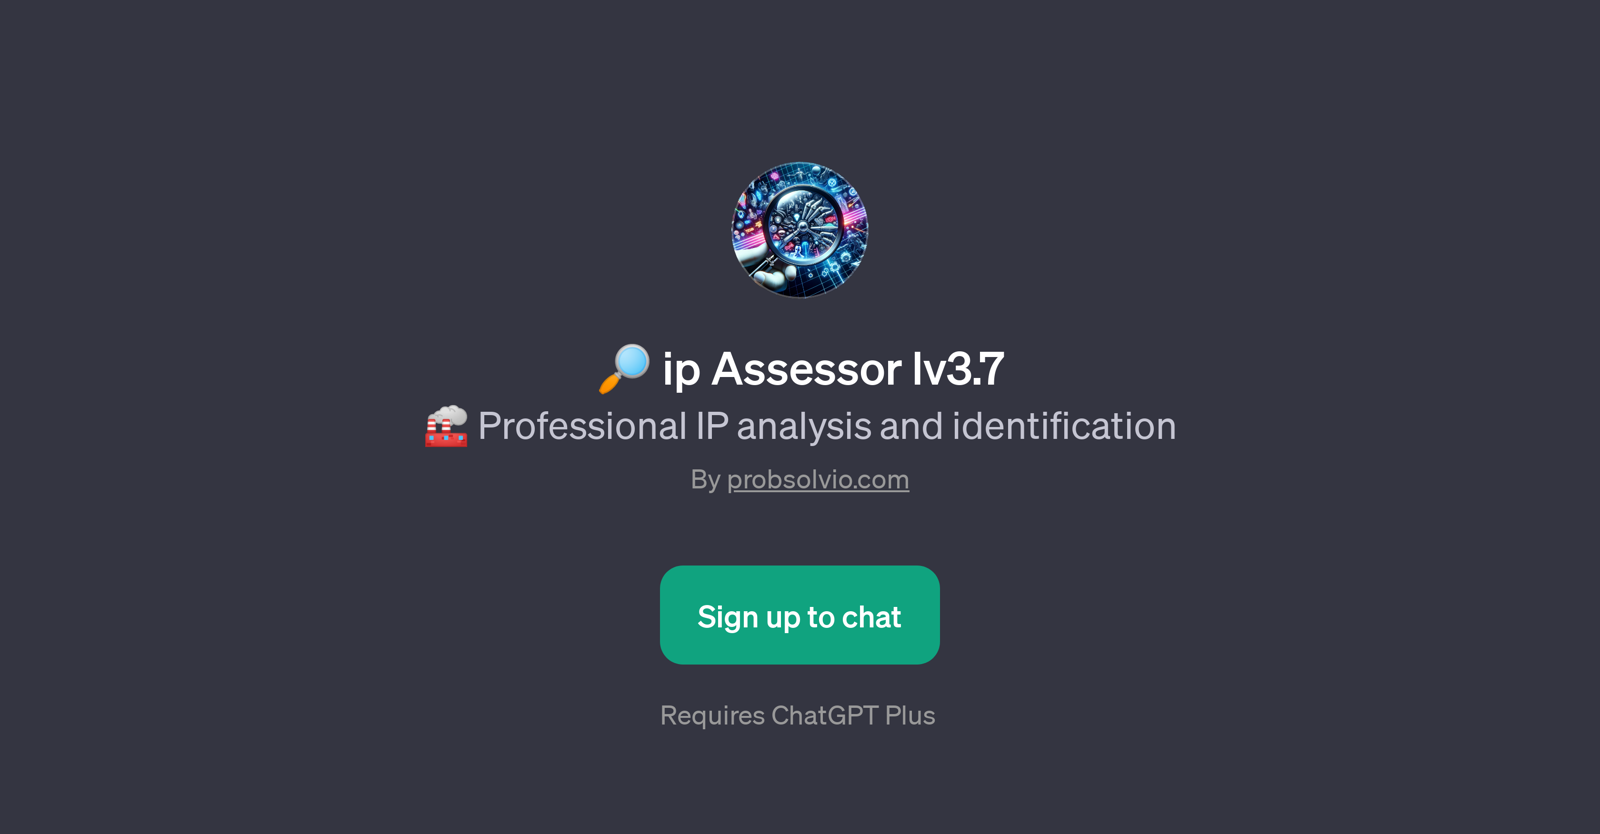 ip Assessor lv3.7 website